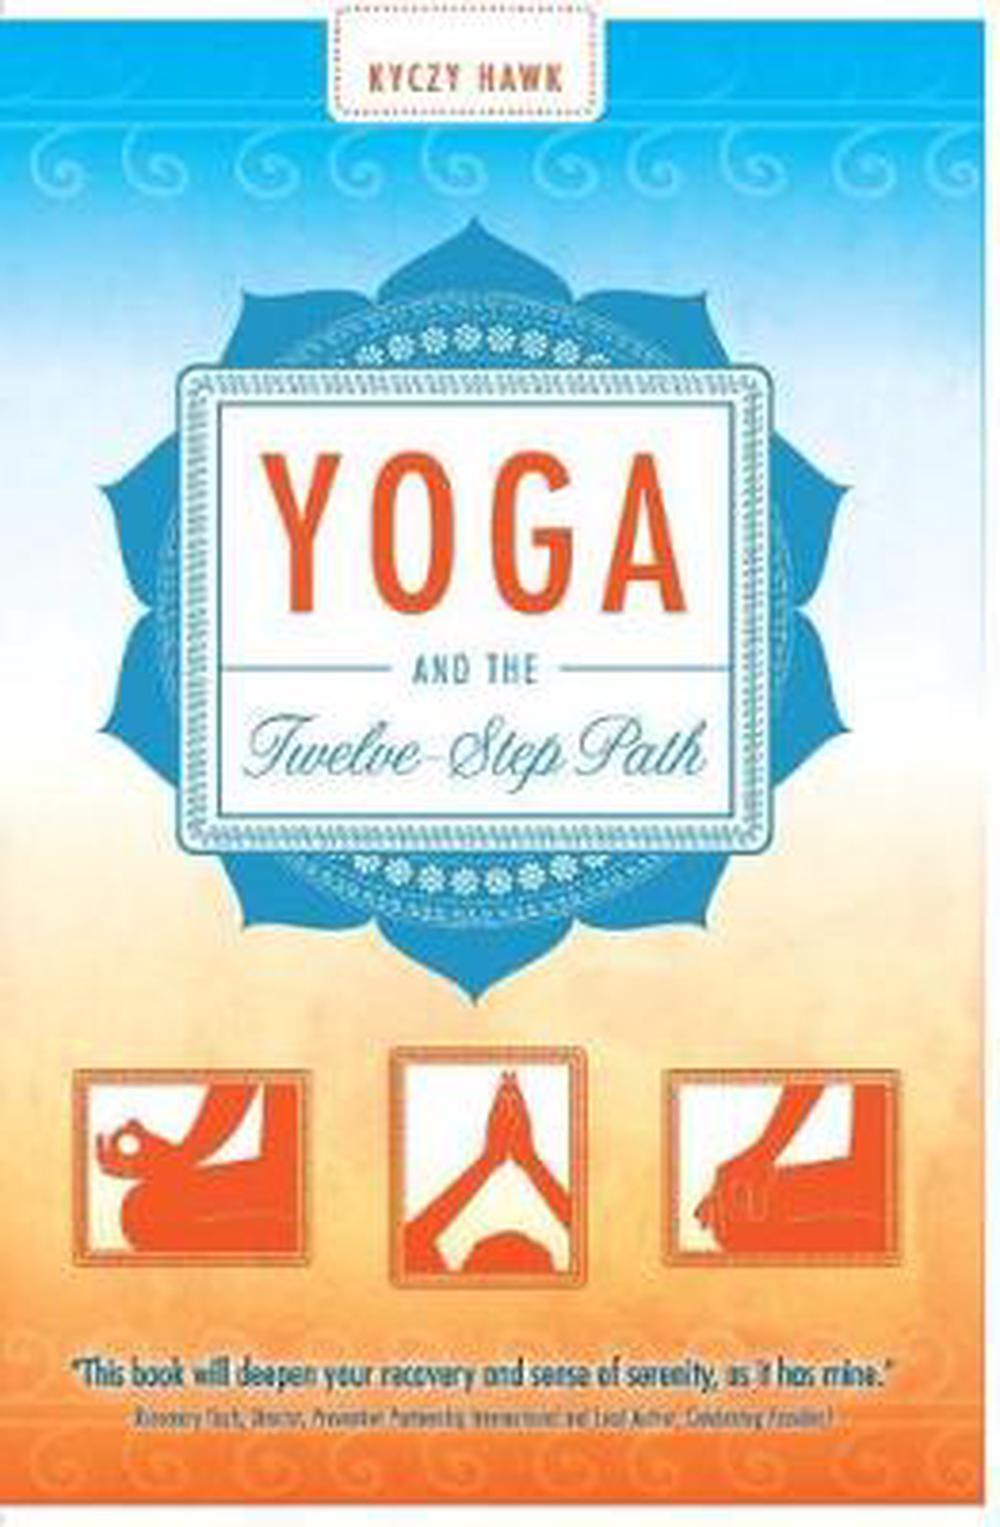 Yoga and the Twelve-Step Path by Kyczy Hawk (English ...